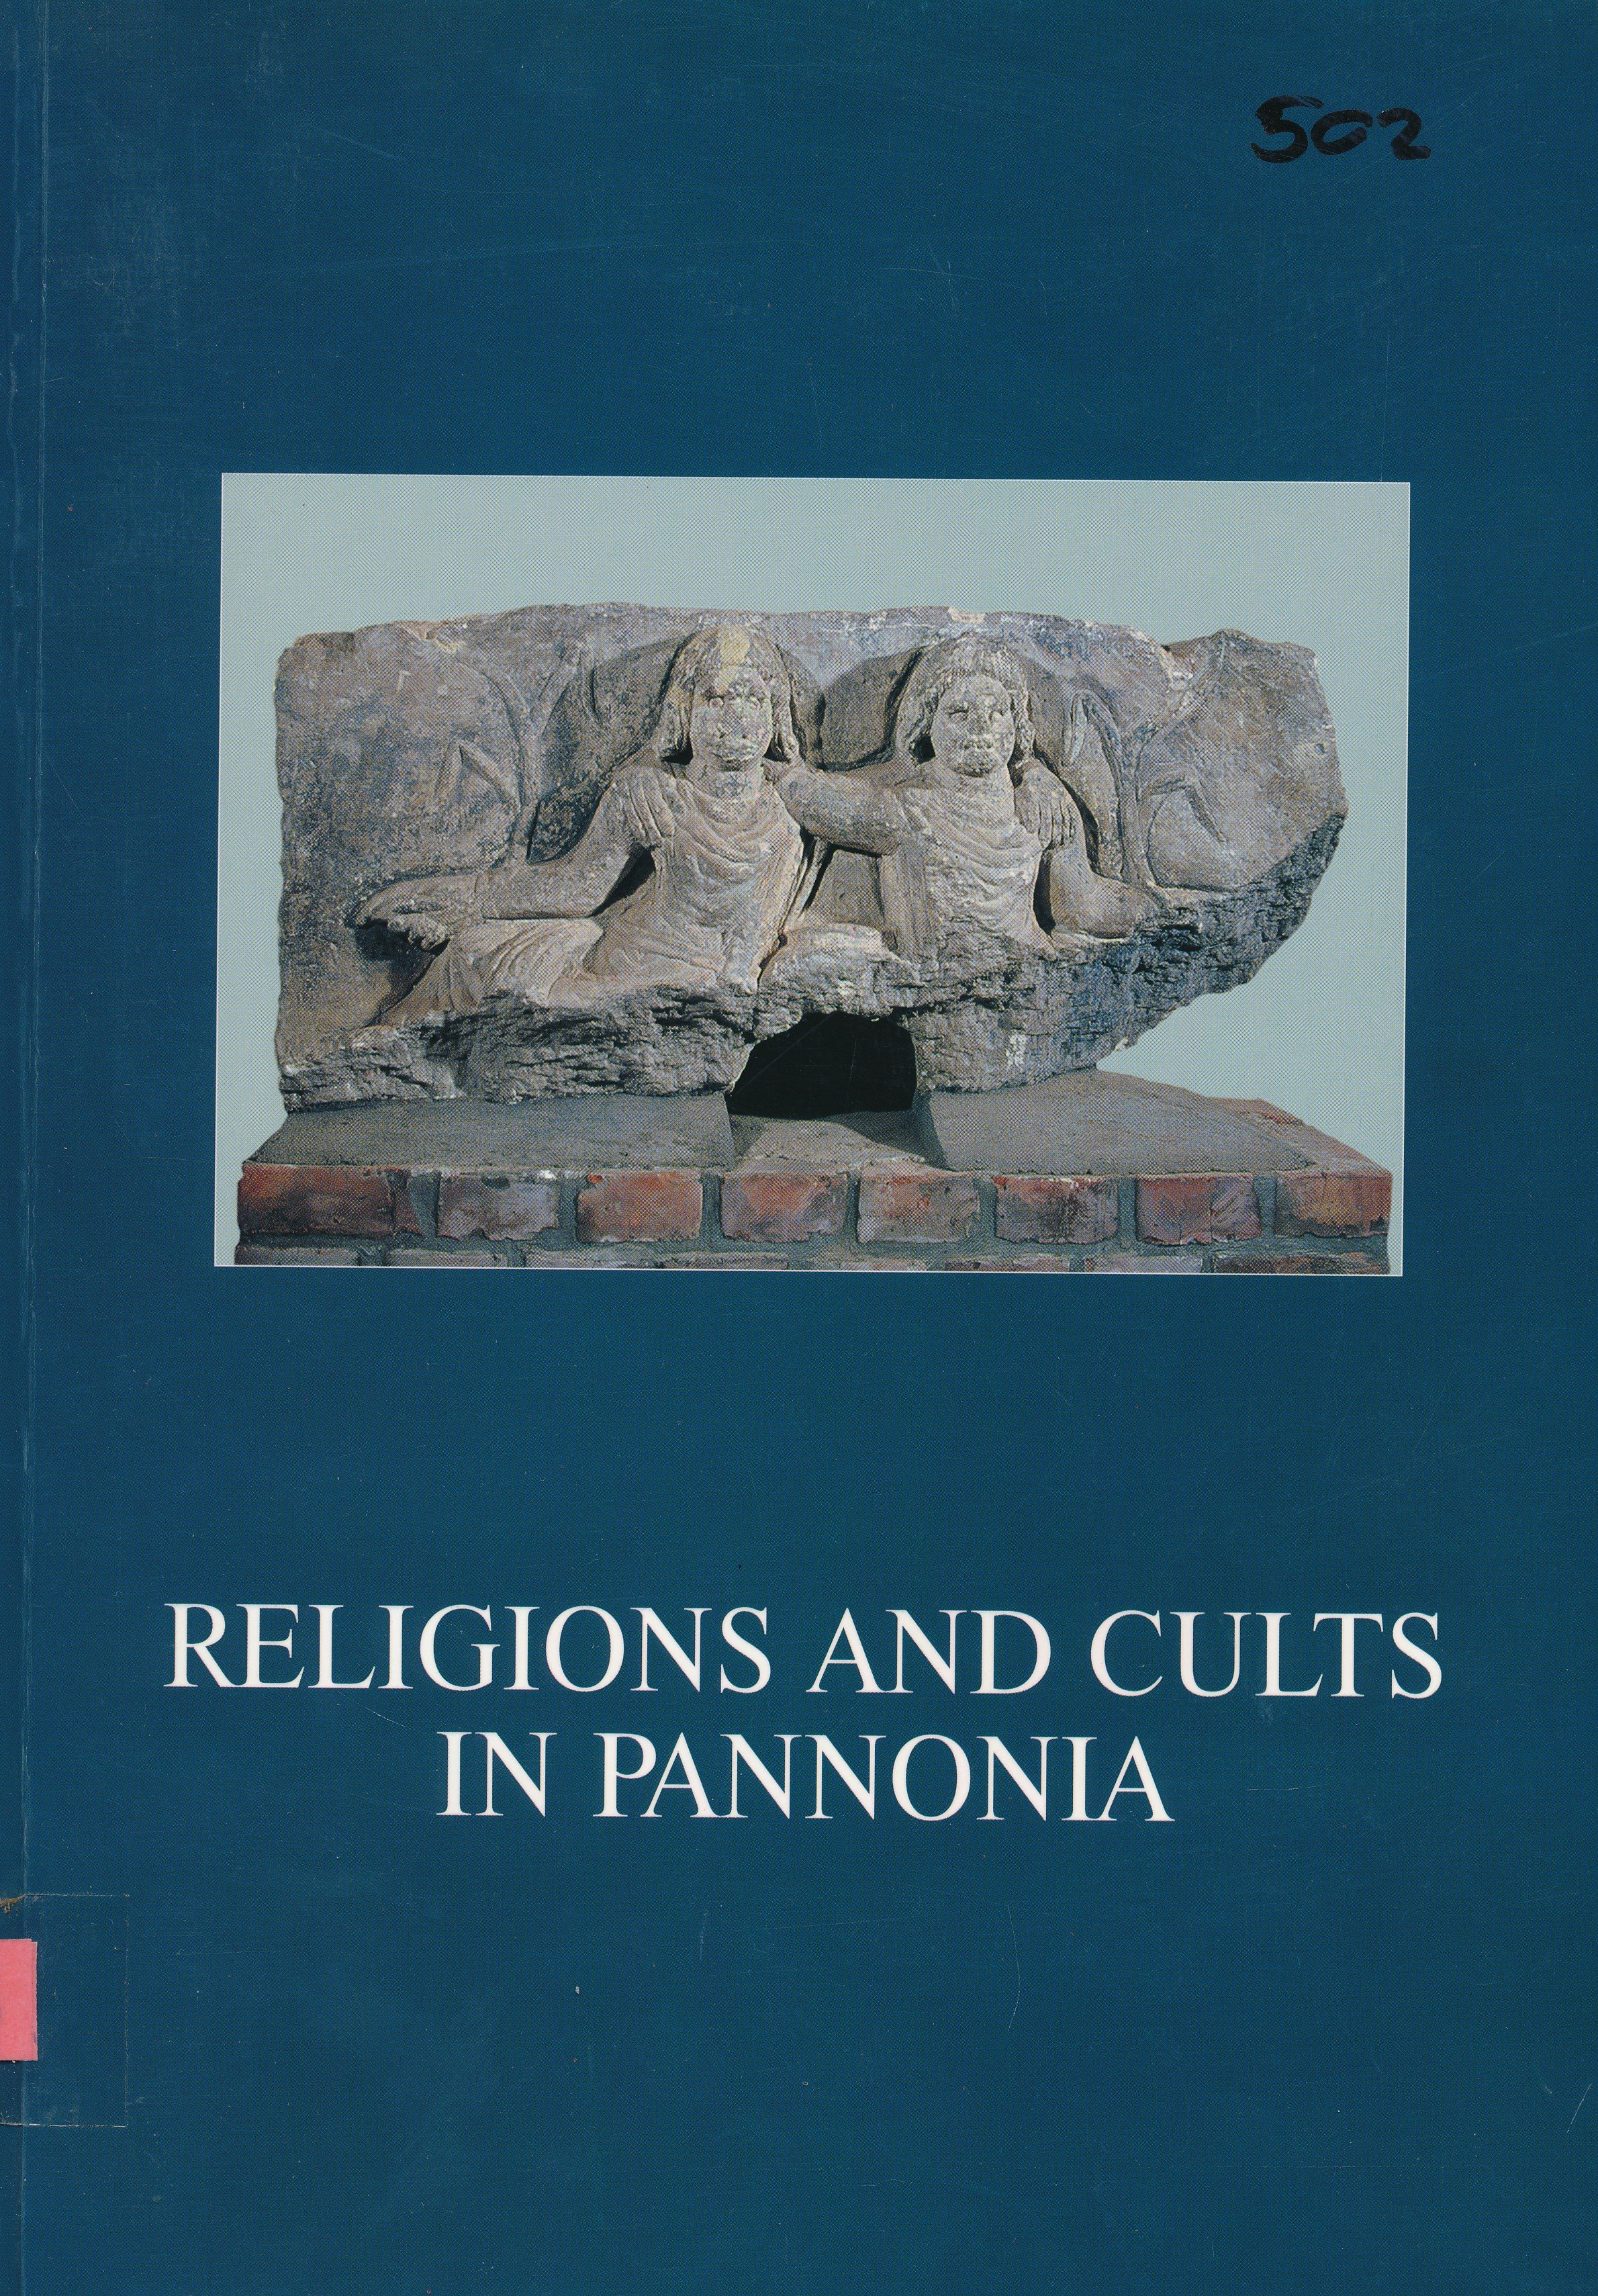 Religions and cults in Pannonia (Erkel Ferenc Múzeum és Könyvtár, Gyula CC BY-NC-SA)